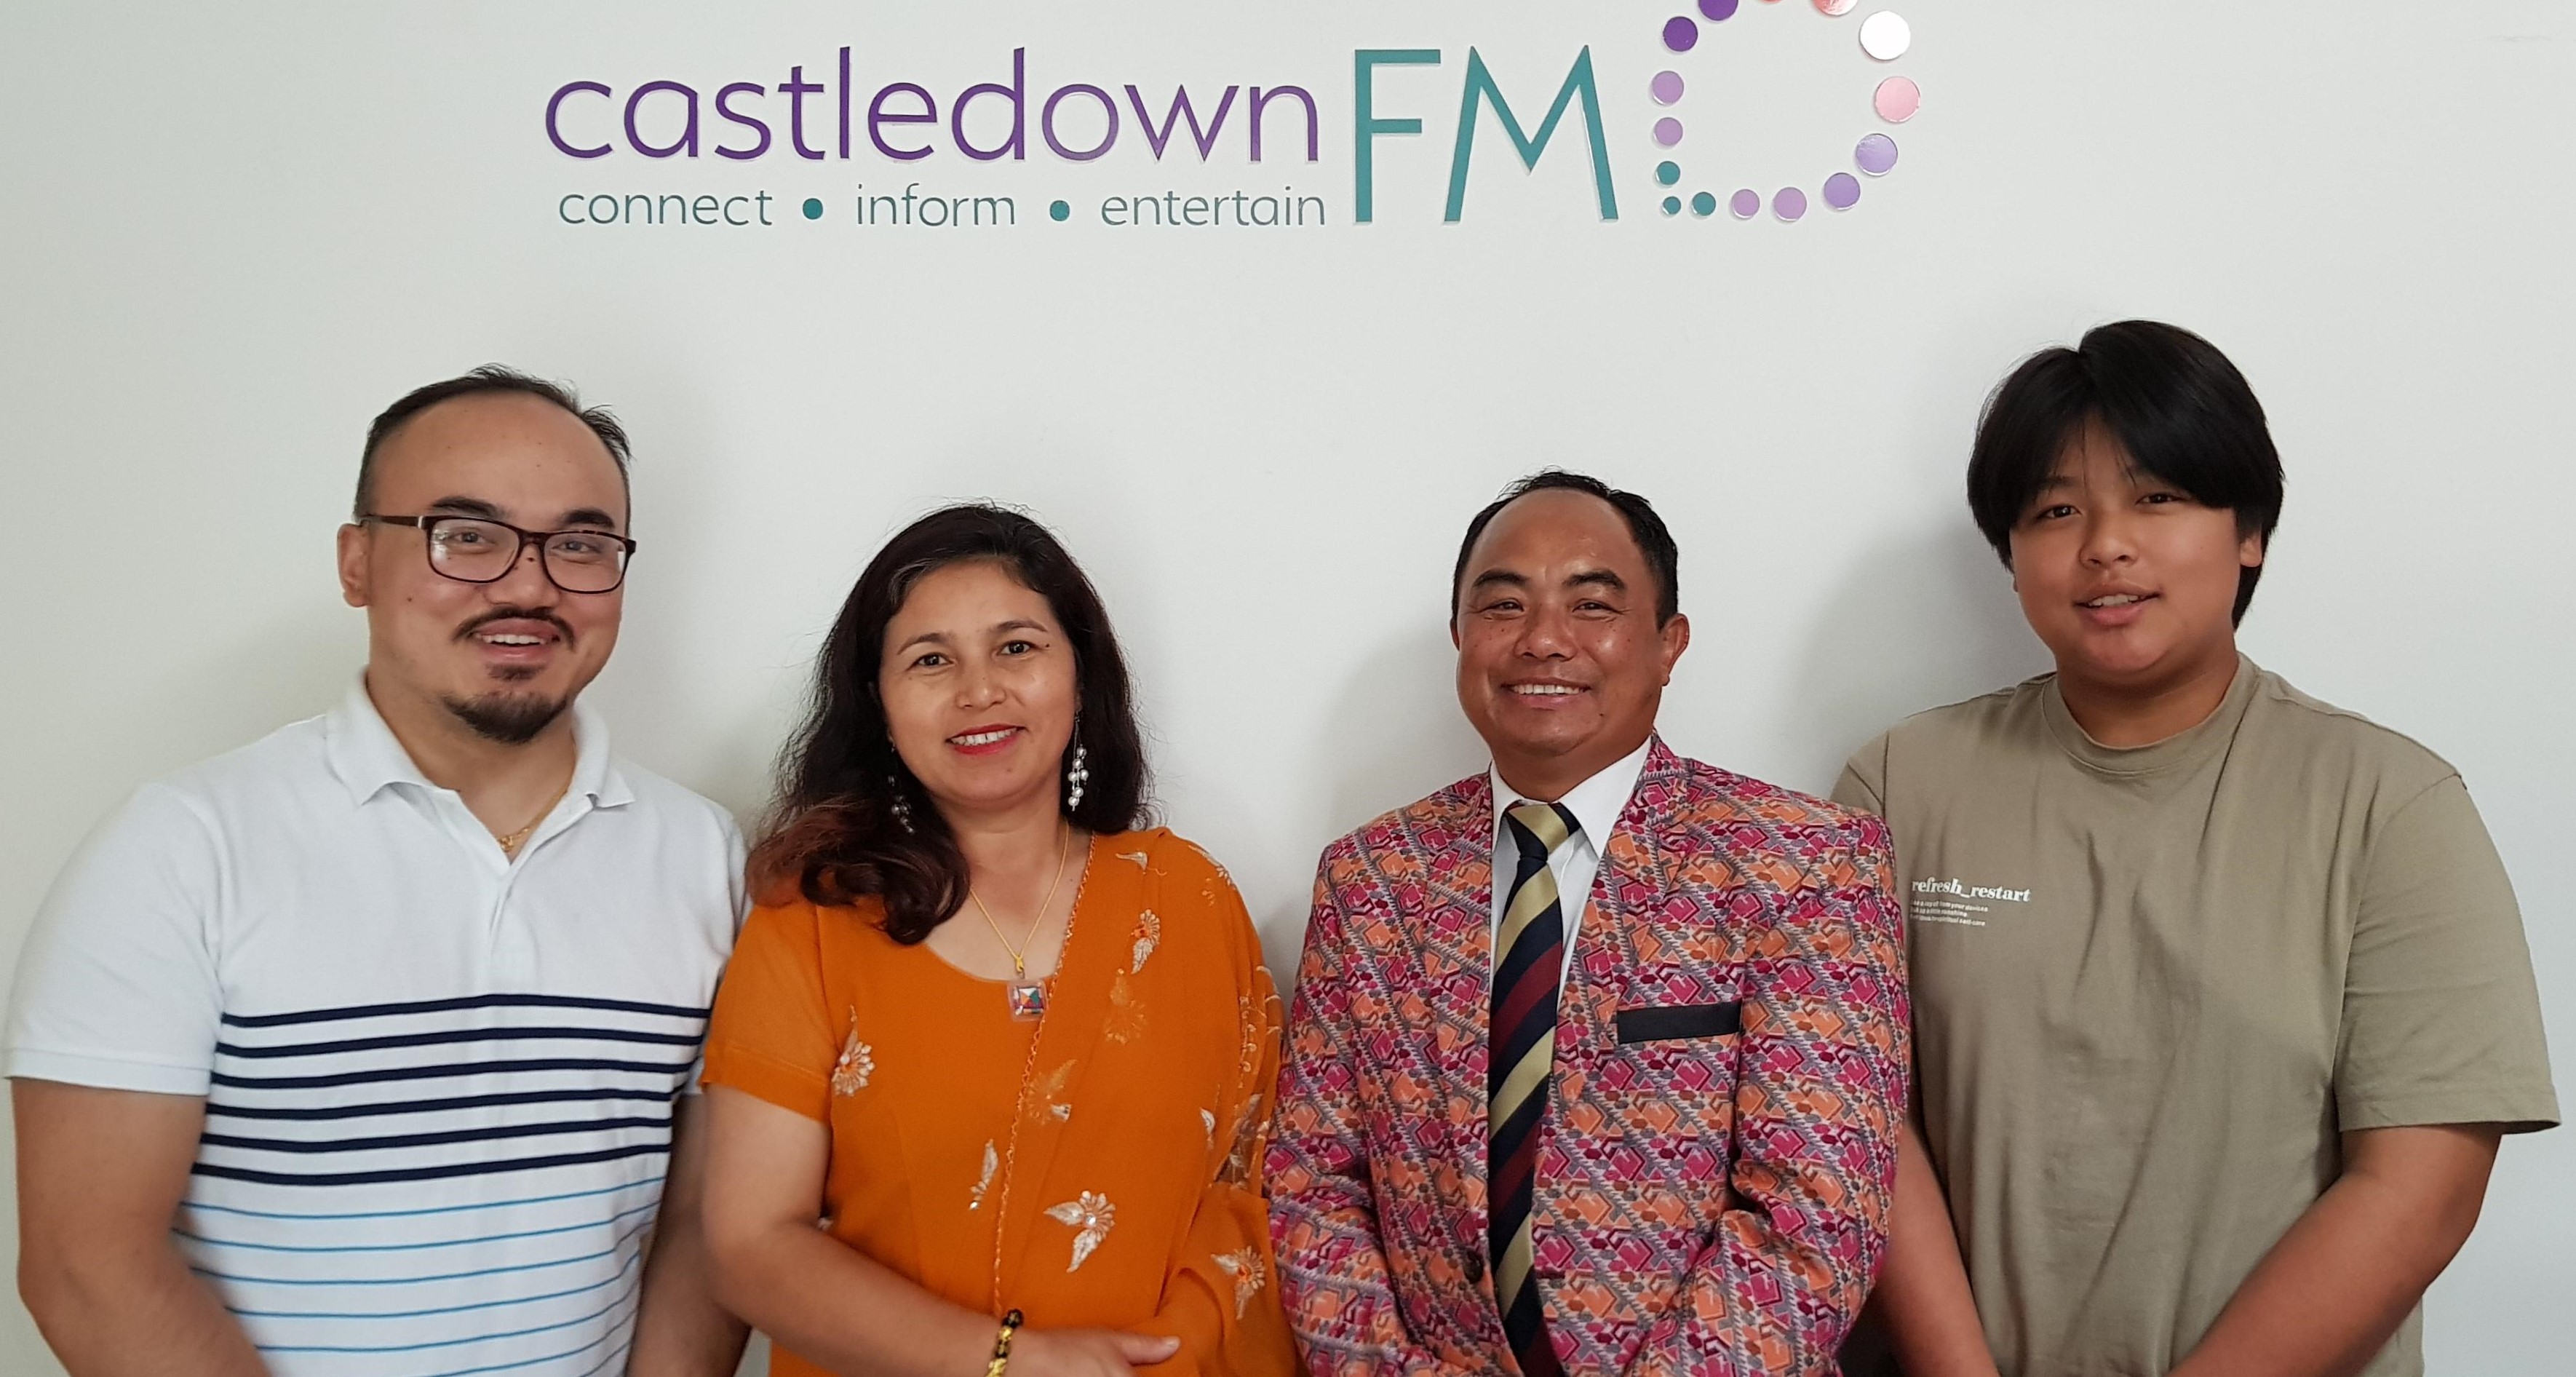 Castledown FM Image for the episode